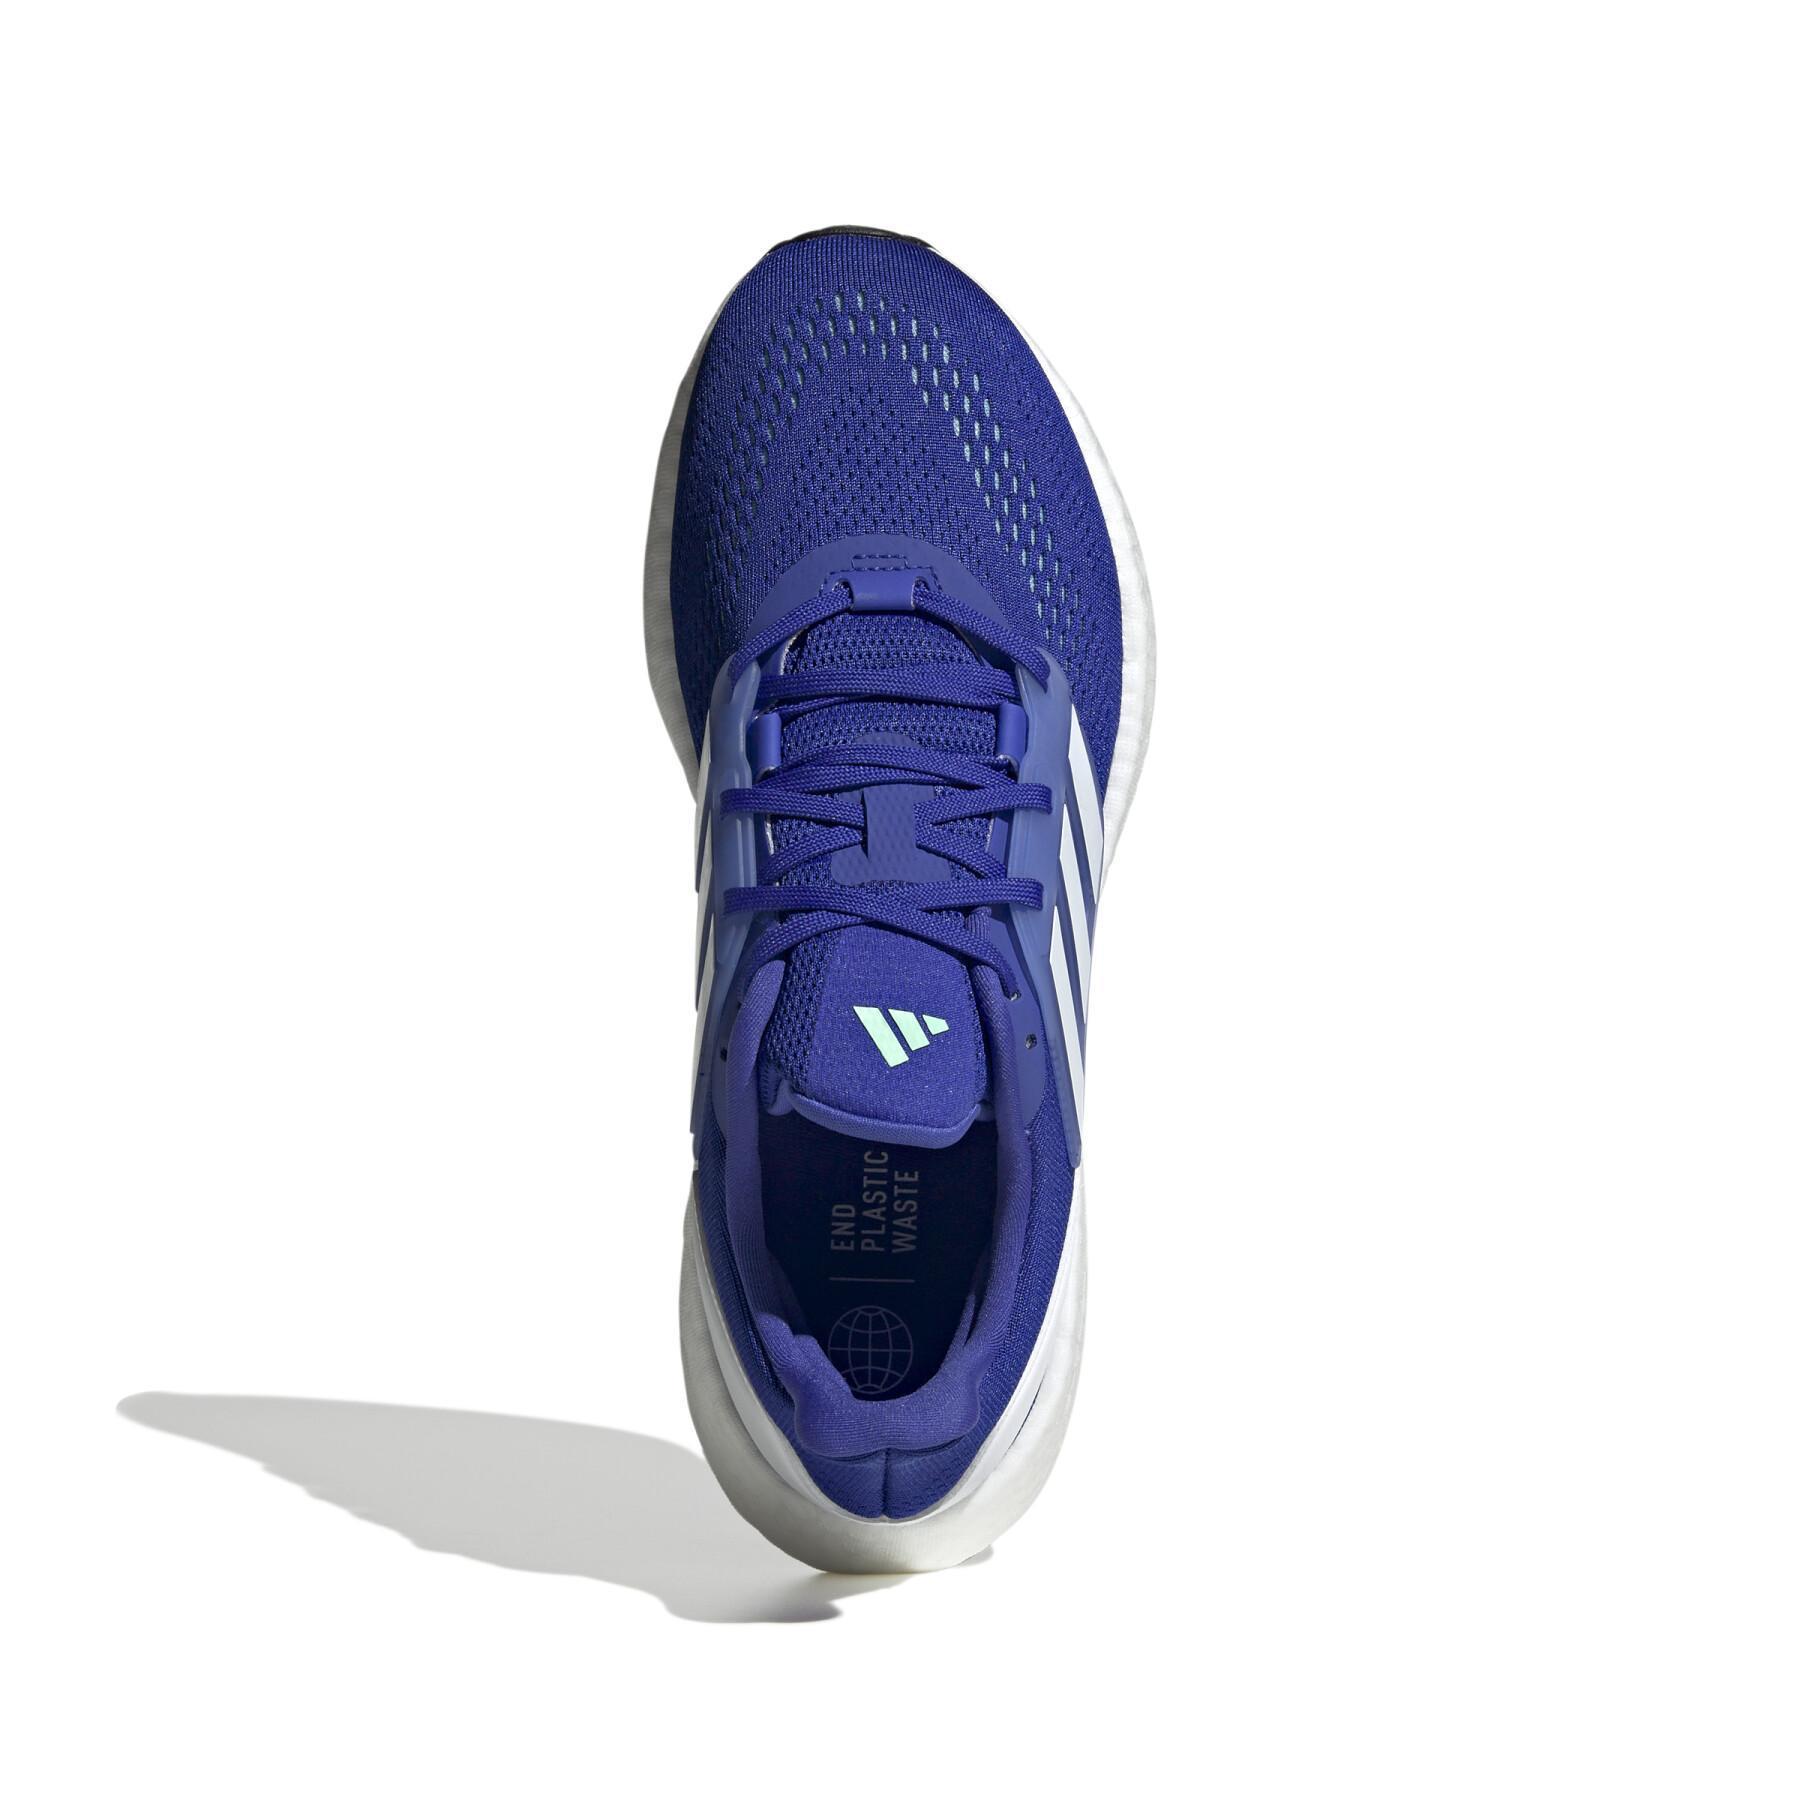 Running shoes adidas Pureboost